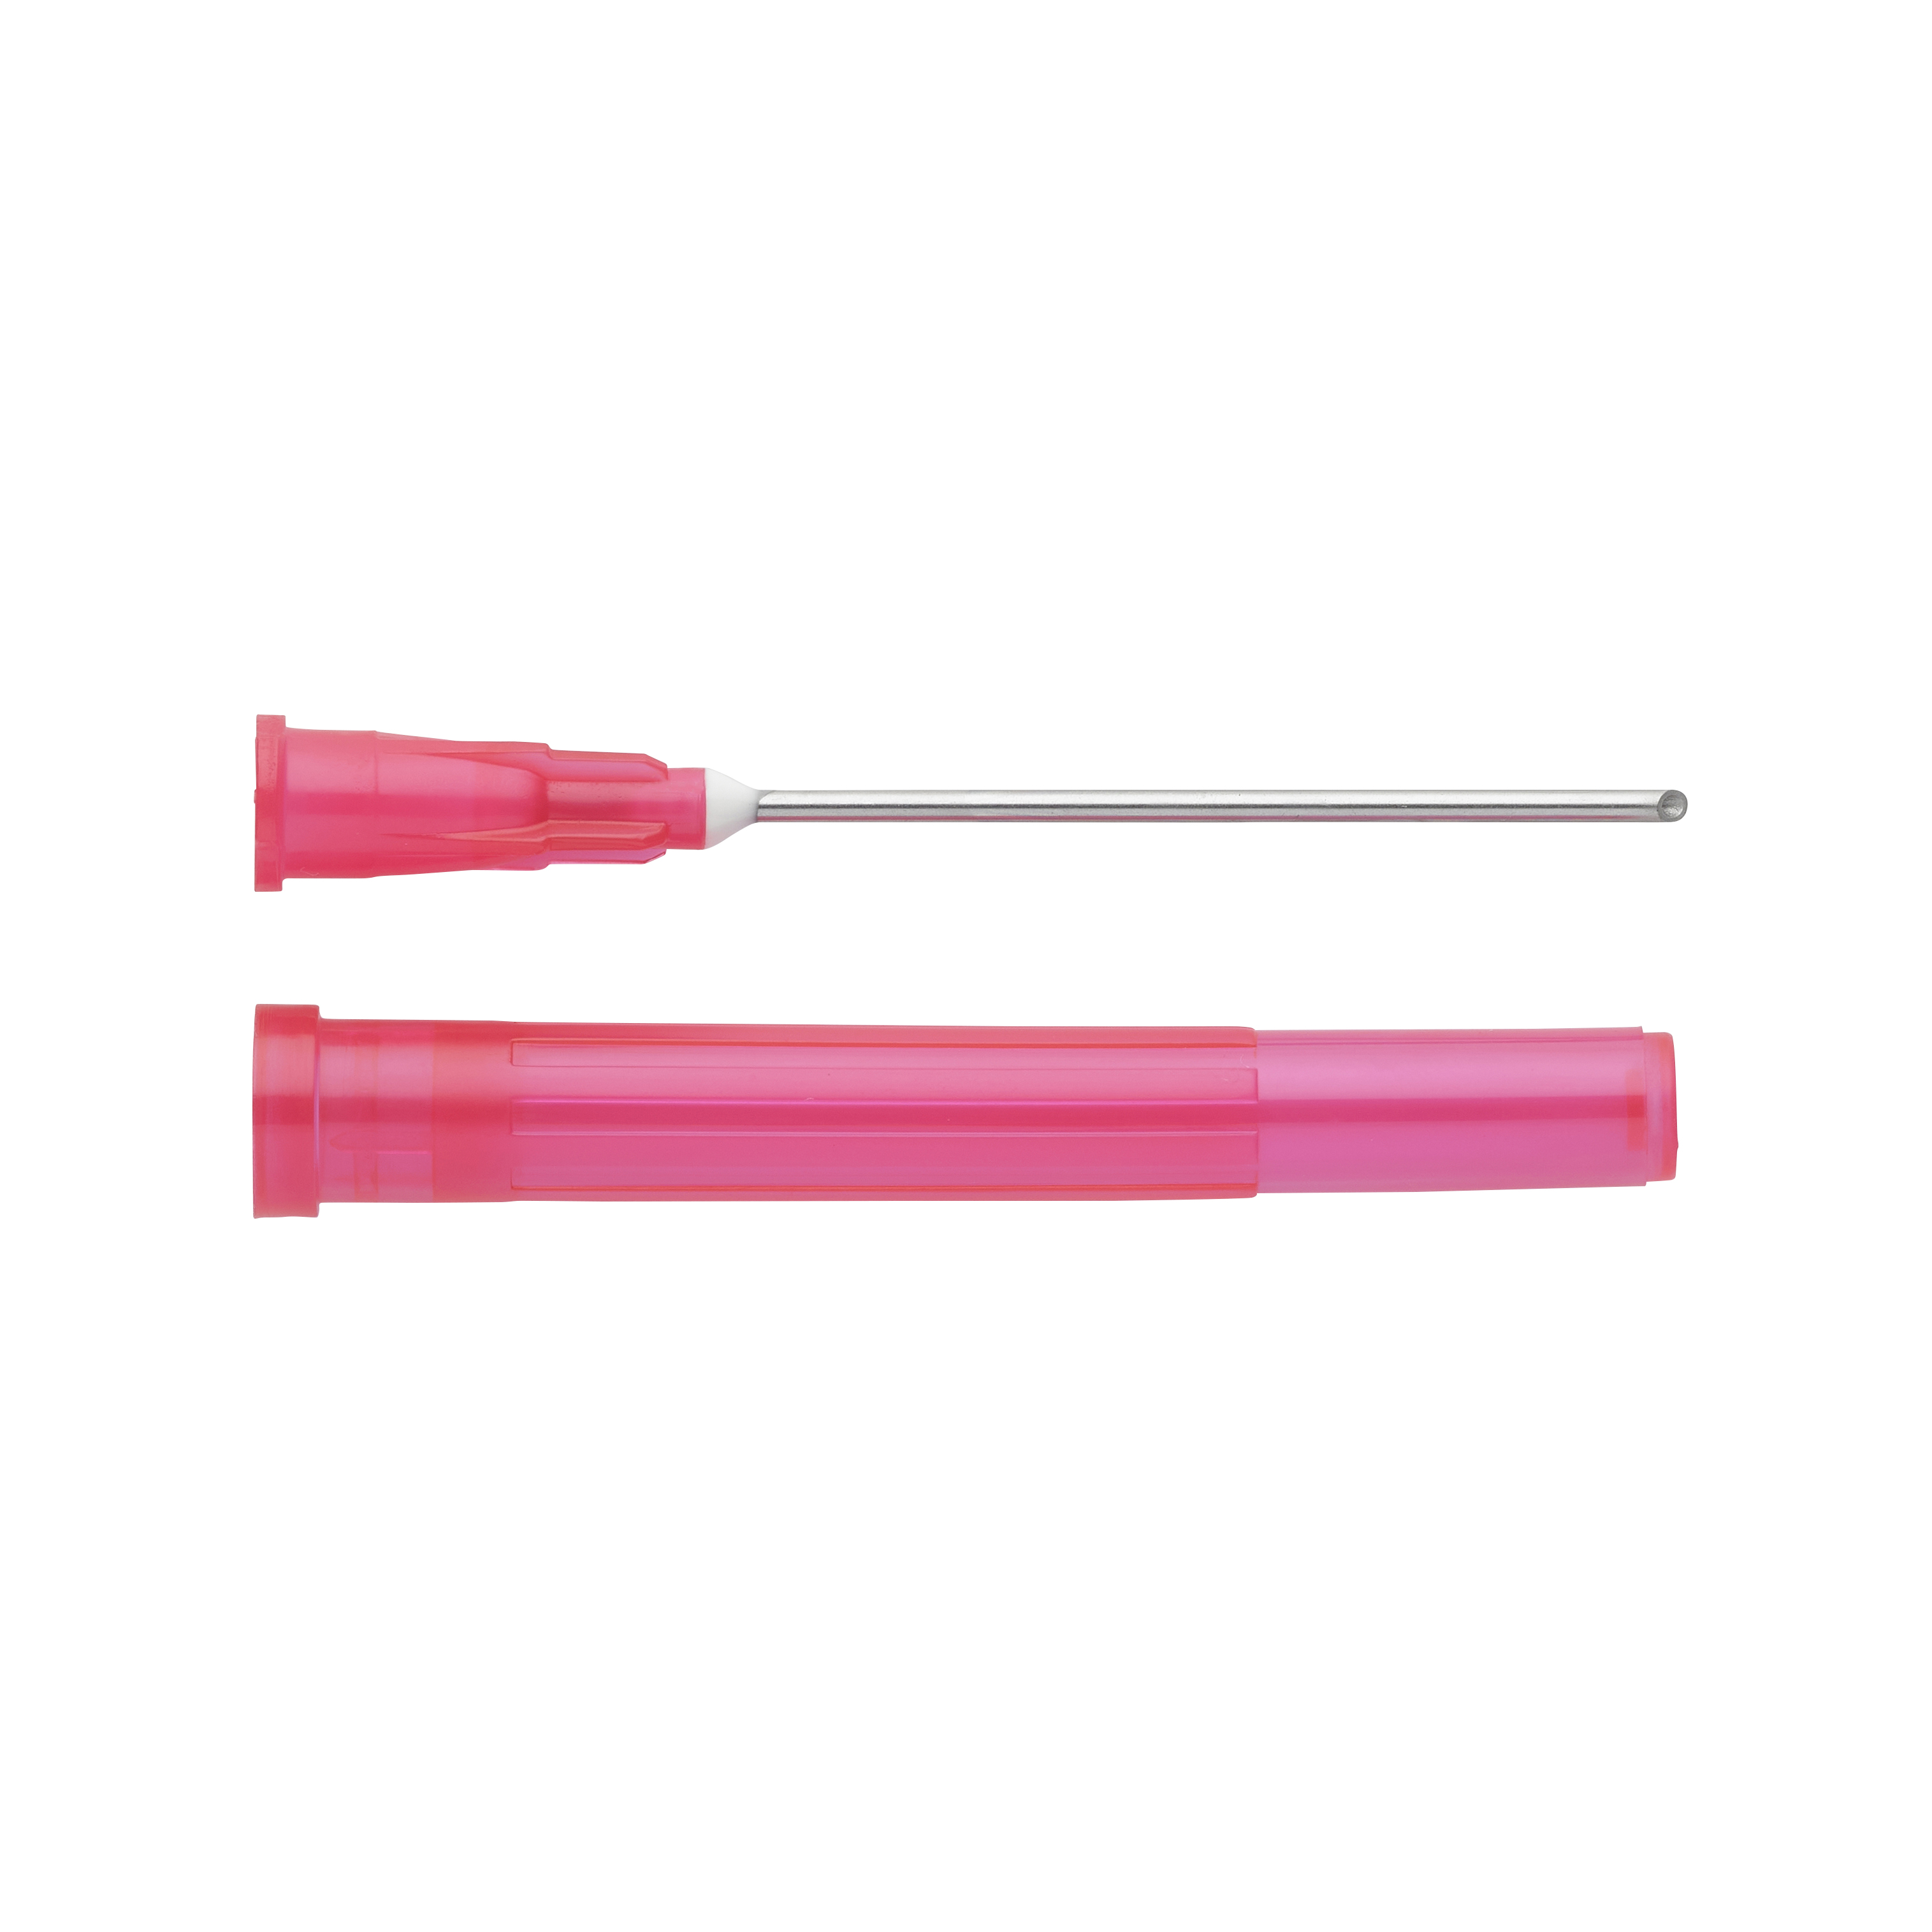 Terumo Unisharp Blunt Fill Needle 18g x 1 1/2 inch - Bevelled 40 degrees (Red)